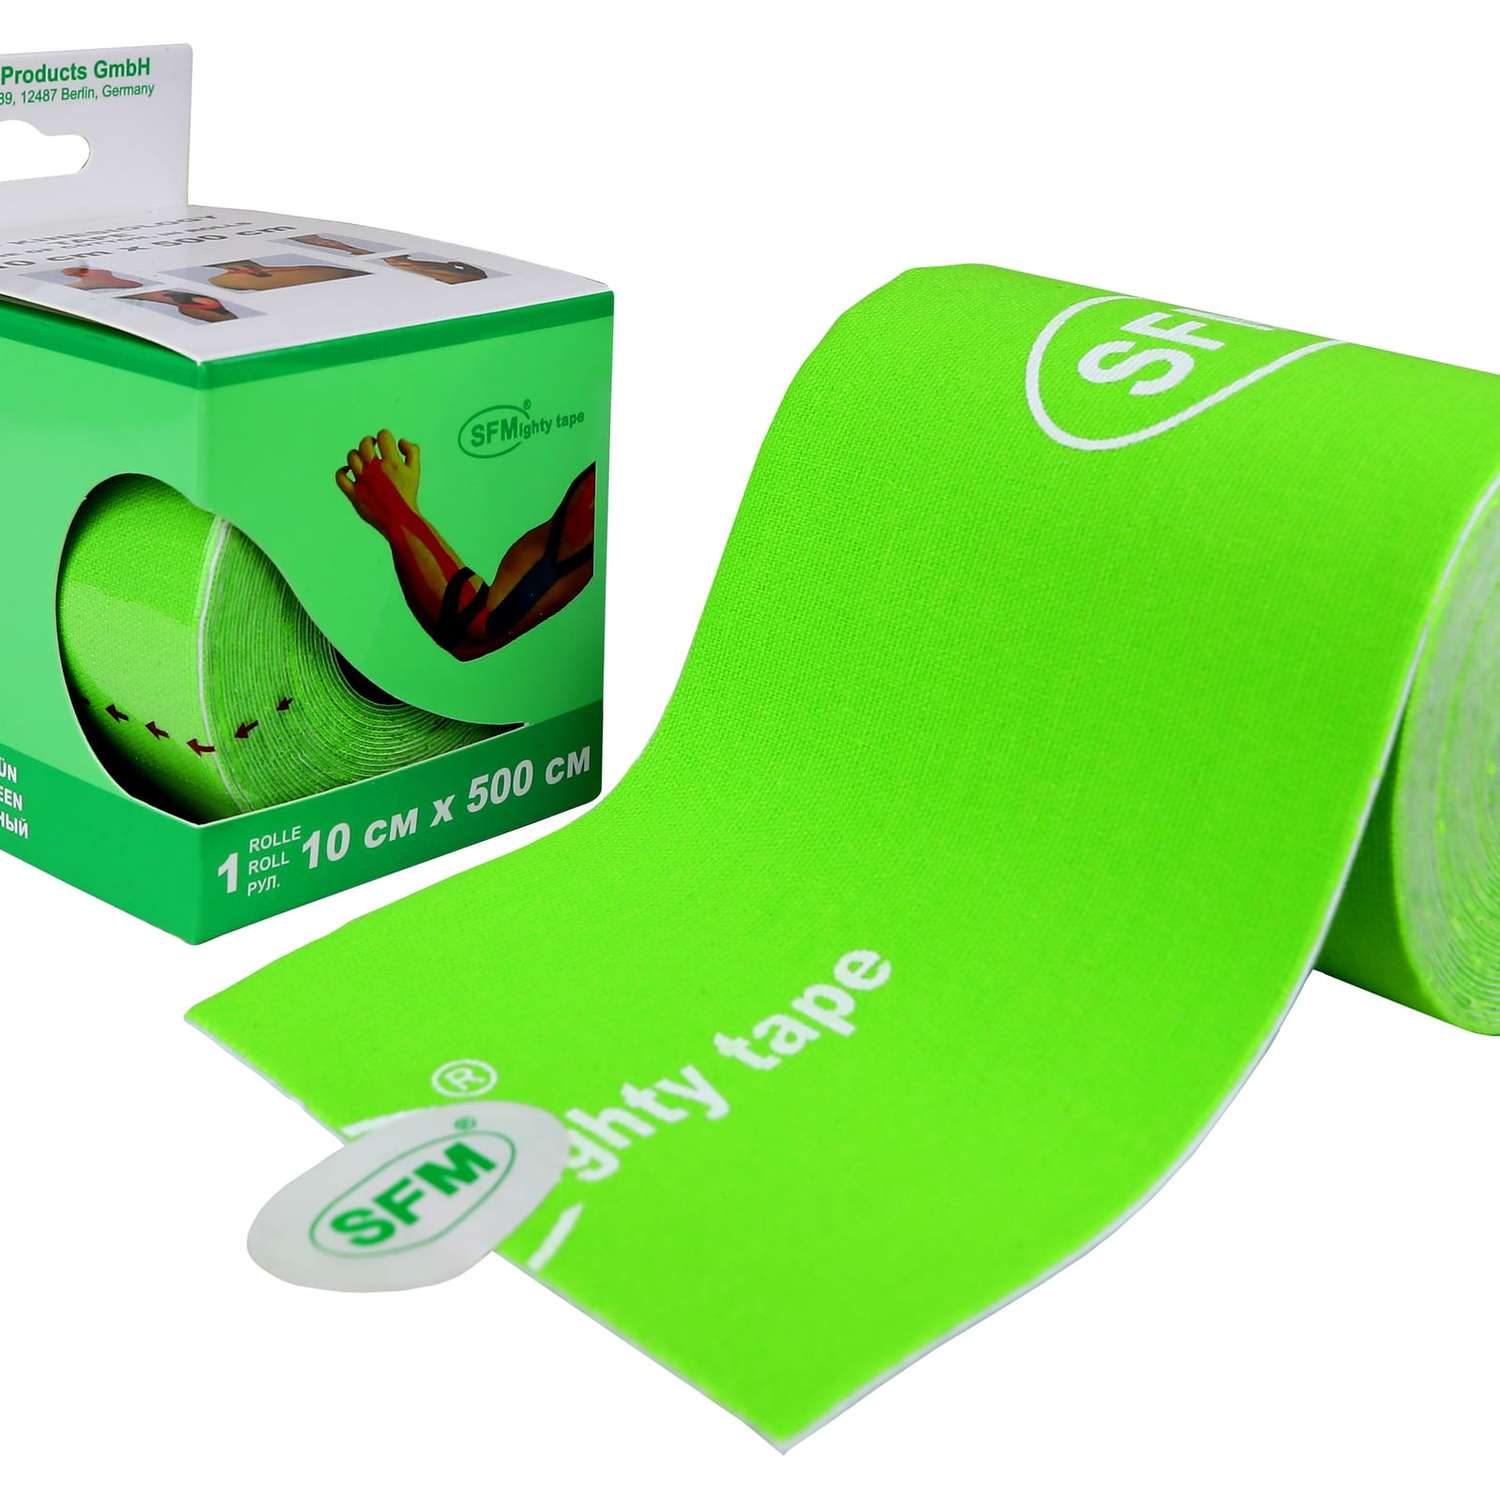 Кинезиотейп SFM Hospital Products Plaster на хлопковой основе 10х500 см зеленого цвета в диспенсере с логотипом - фото 2